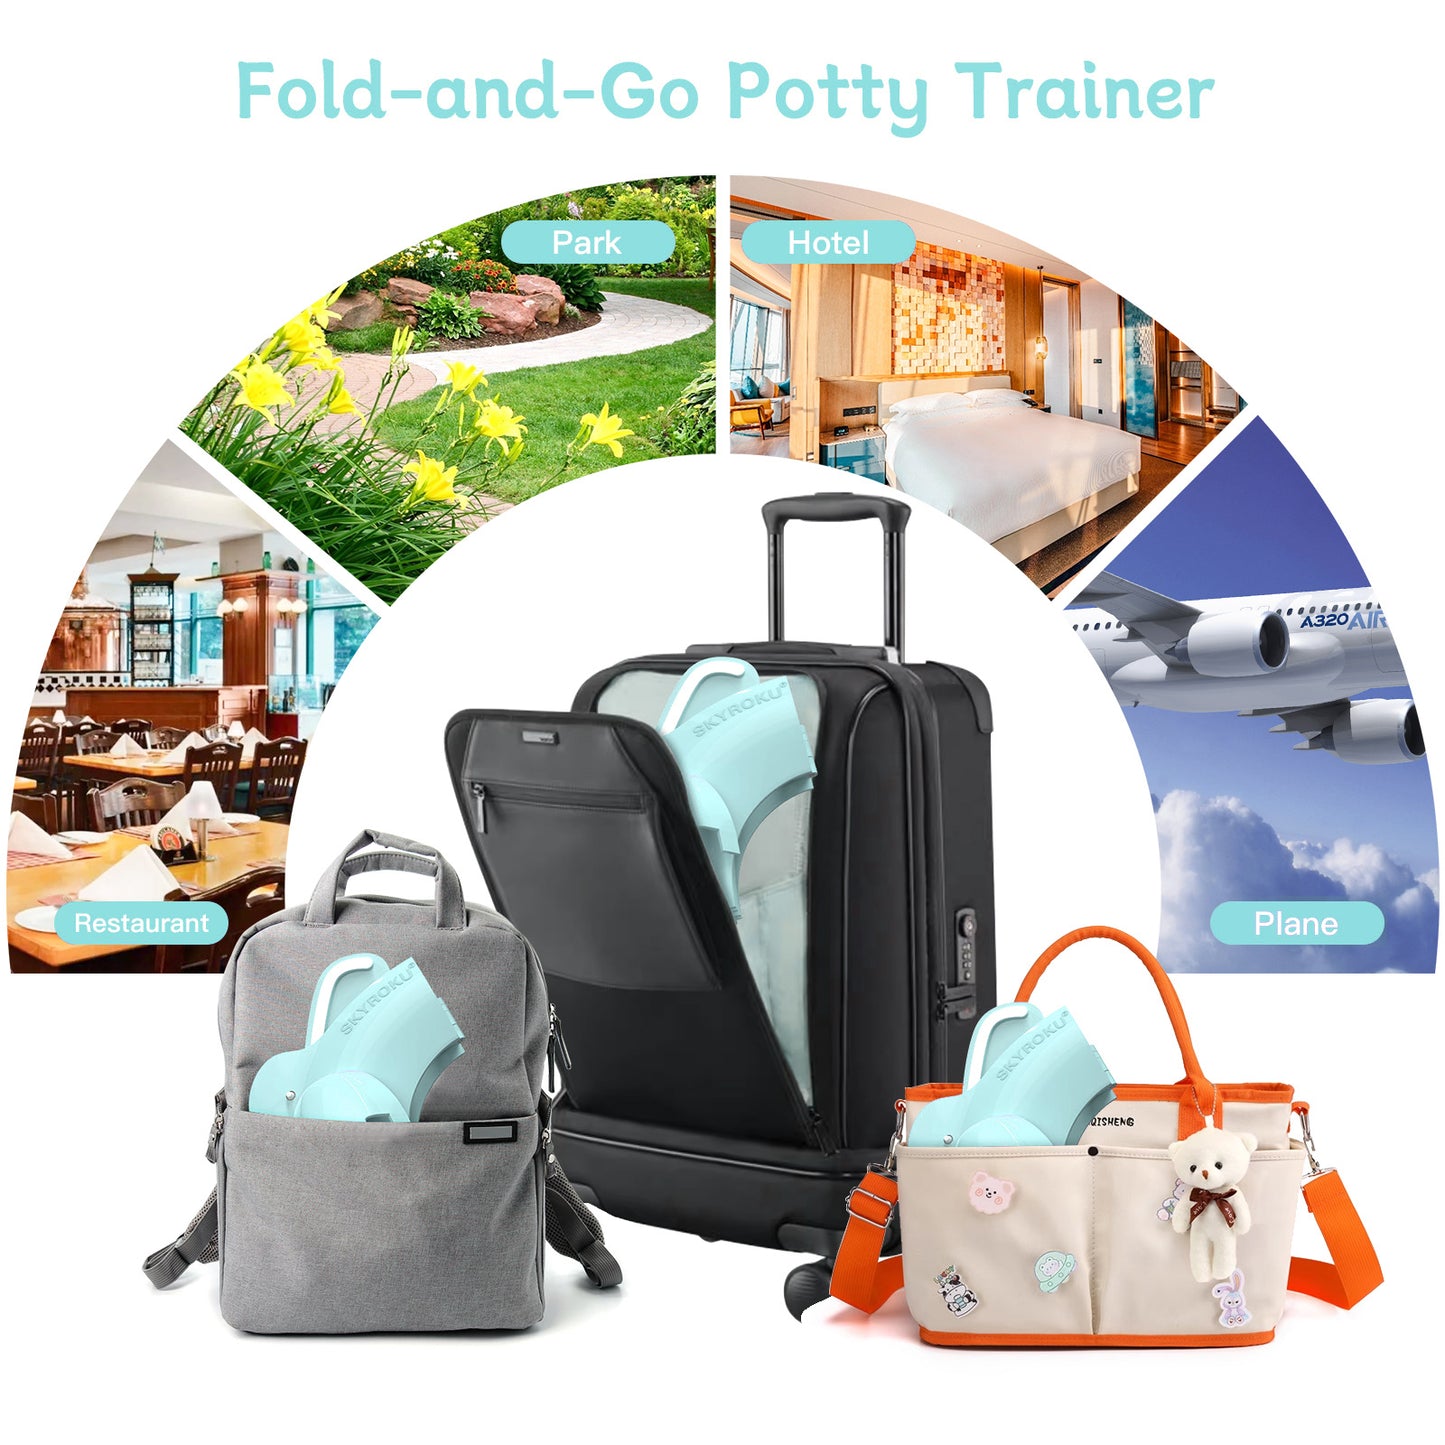 Foldable & Portable Travel Potty Seat - Blue